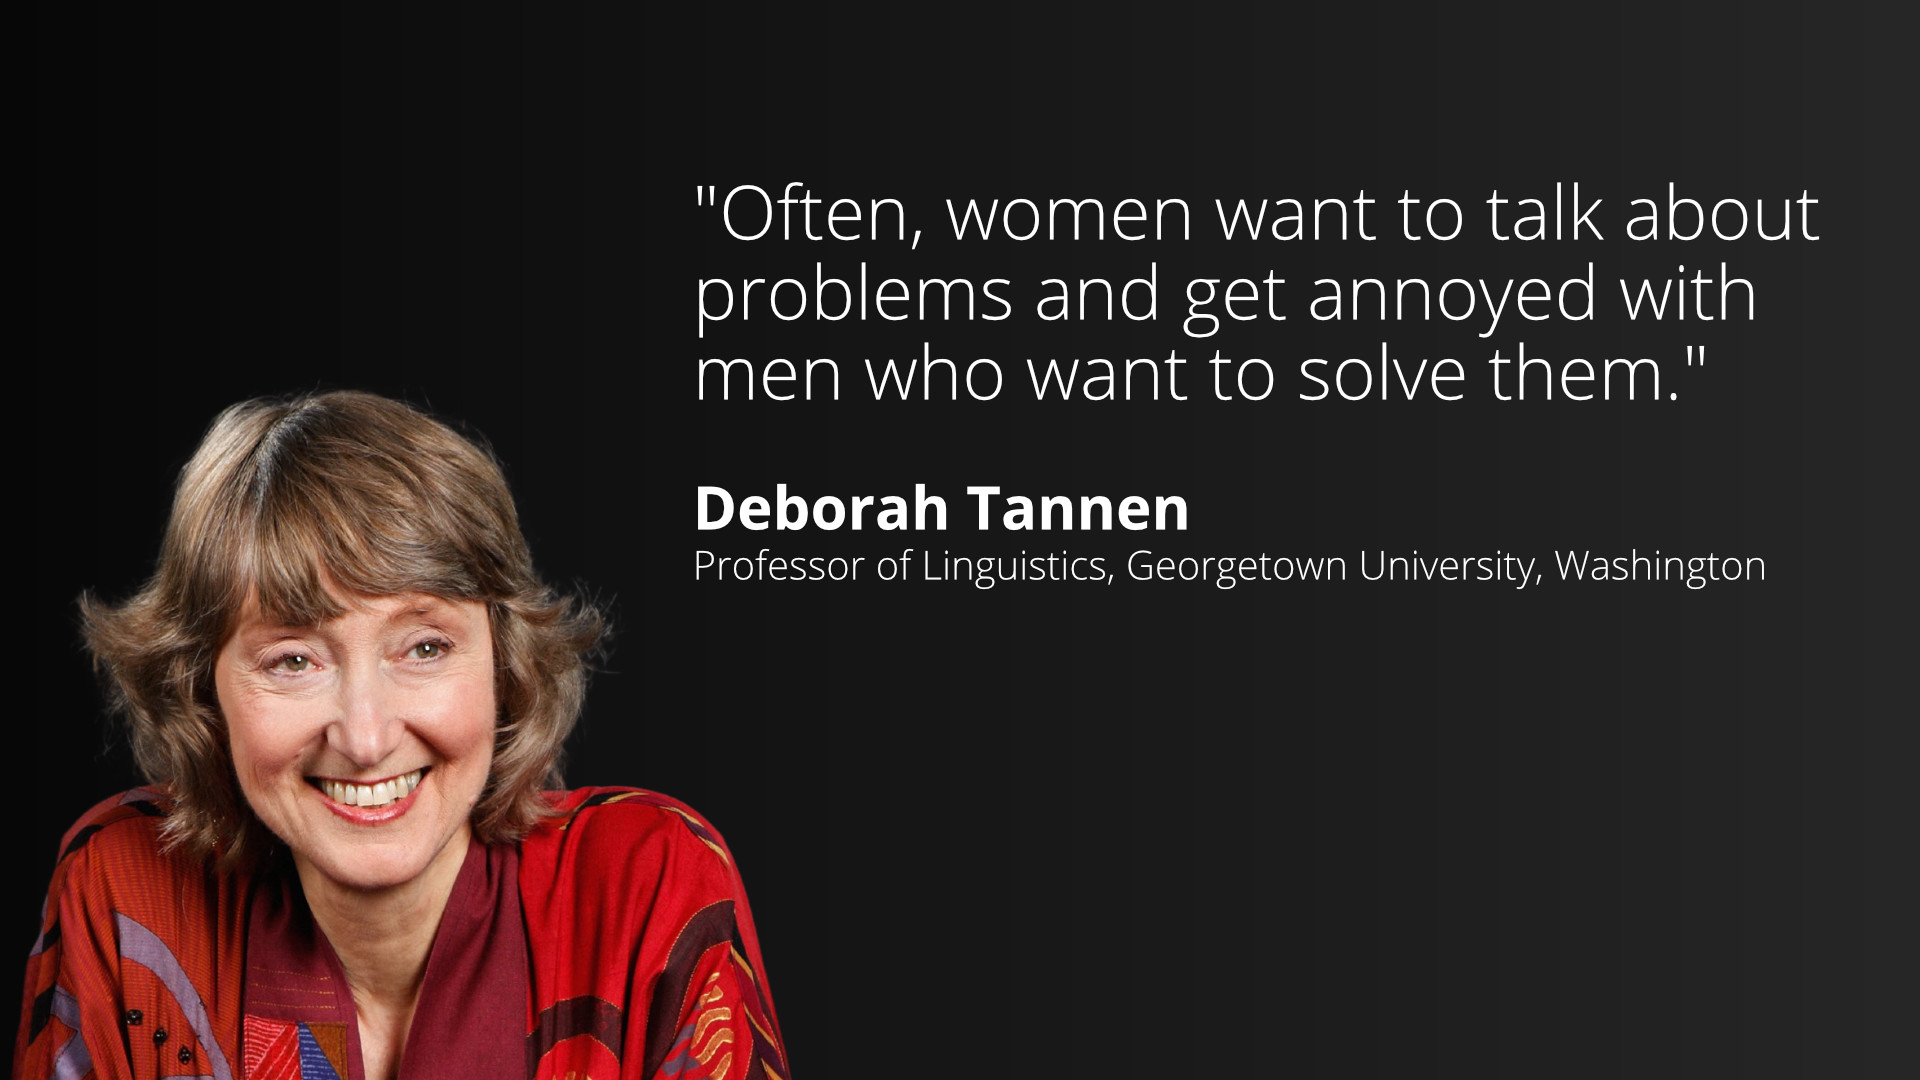 Deborah Tannen - Professor of Linguistics, Georgetown University, Washington